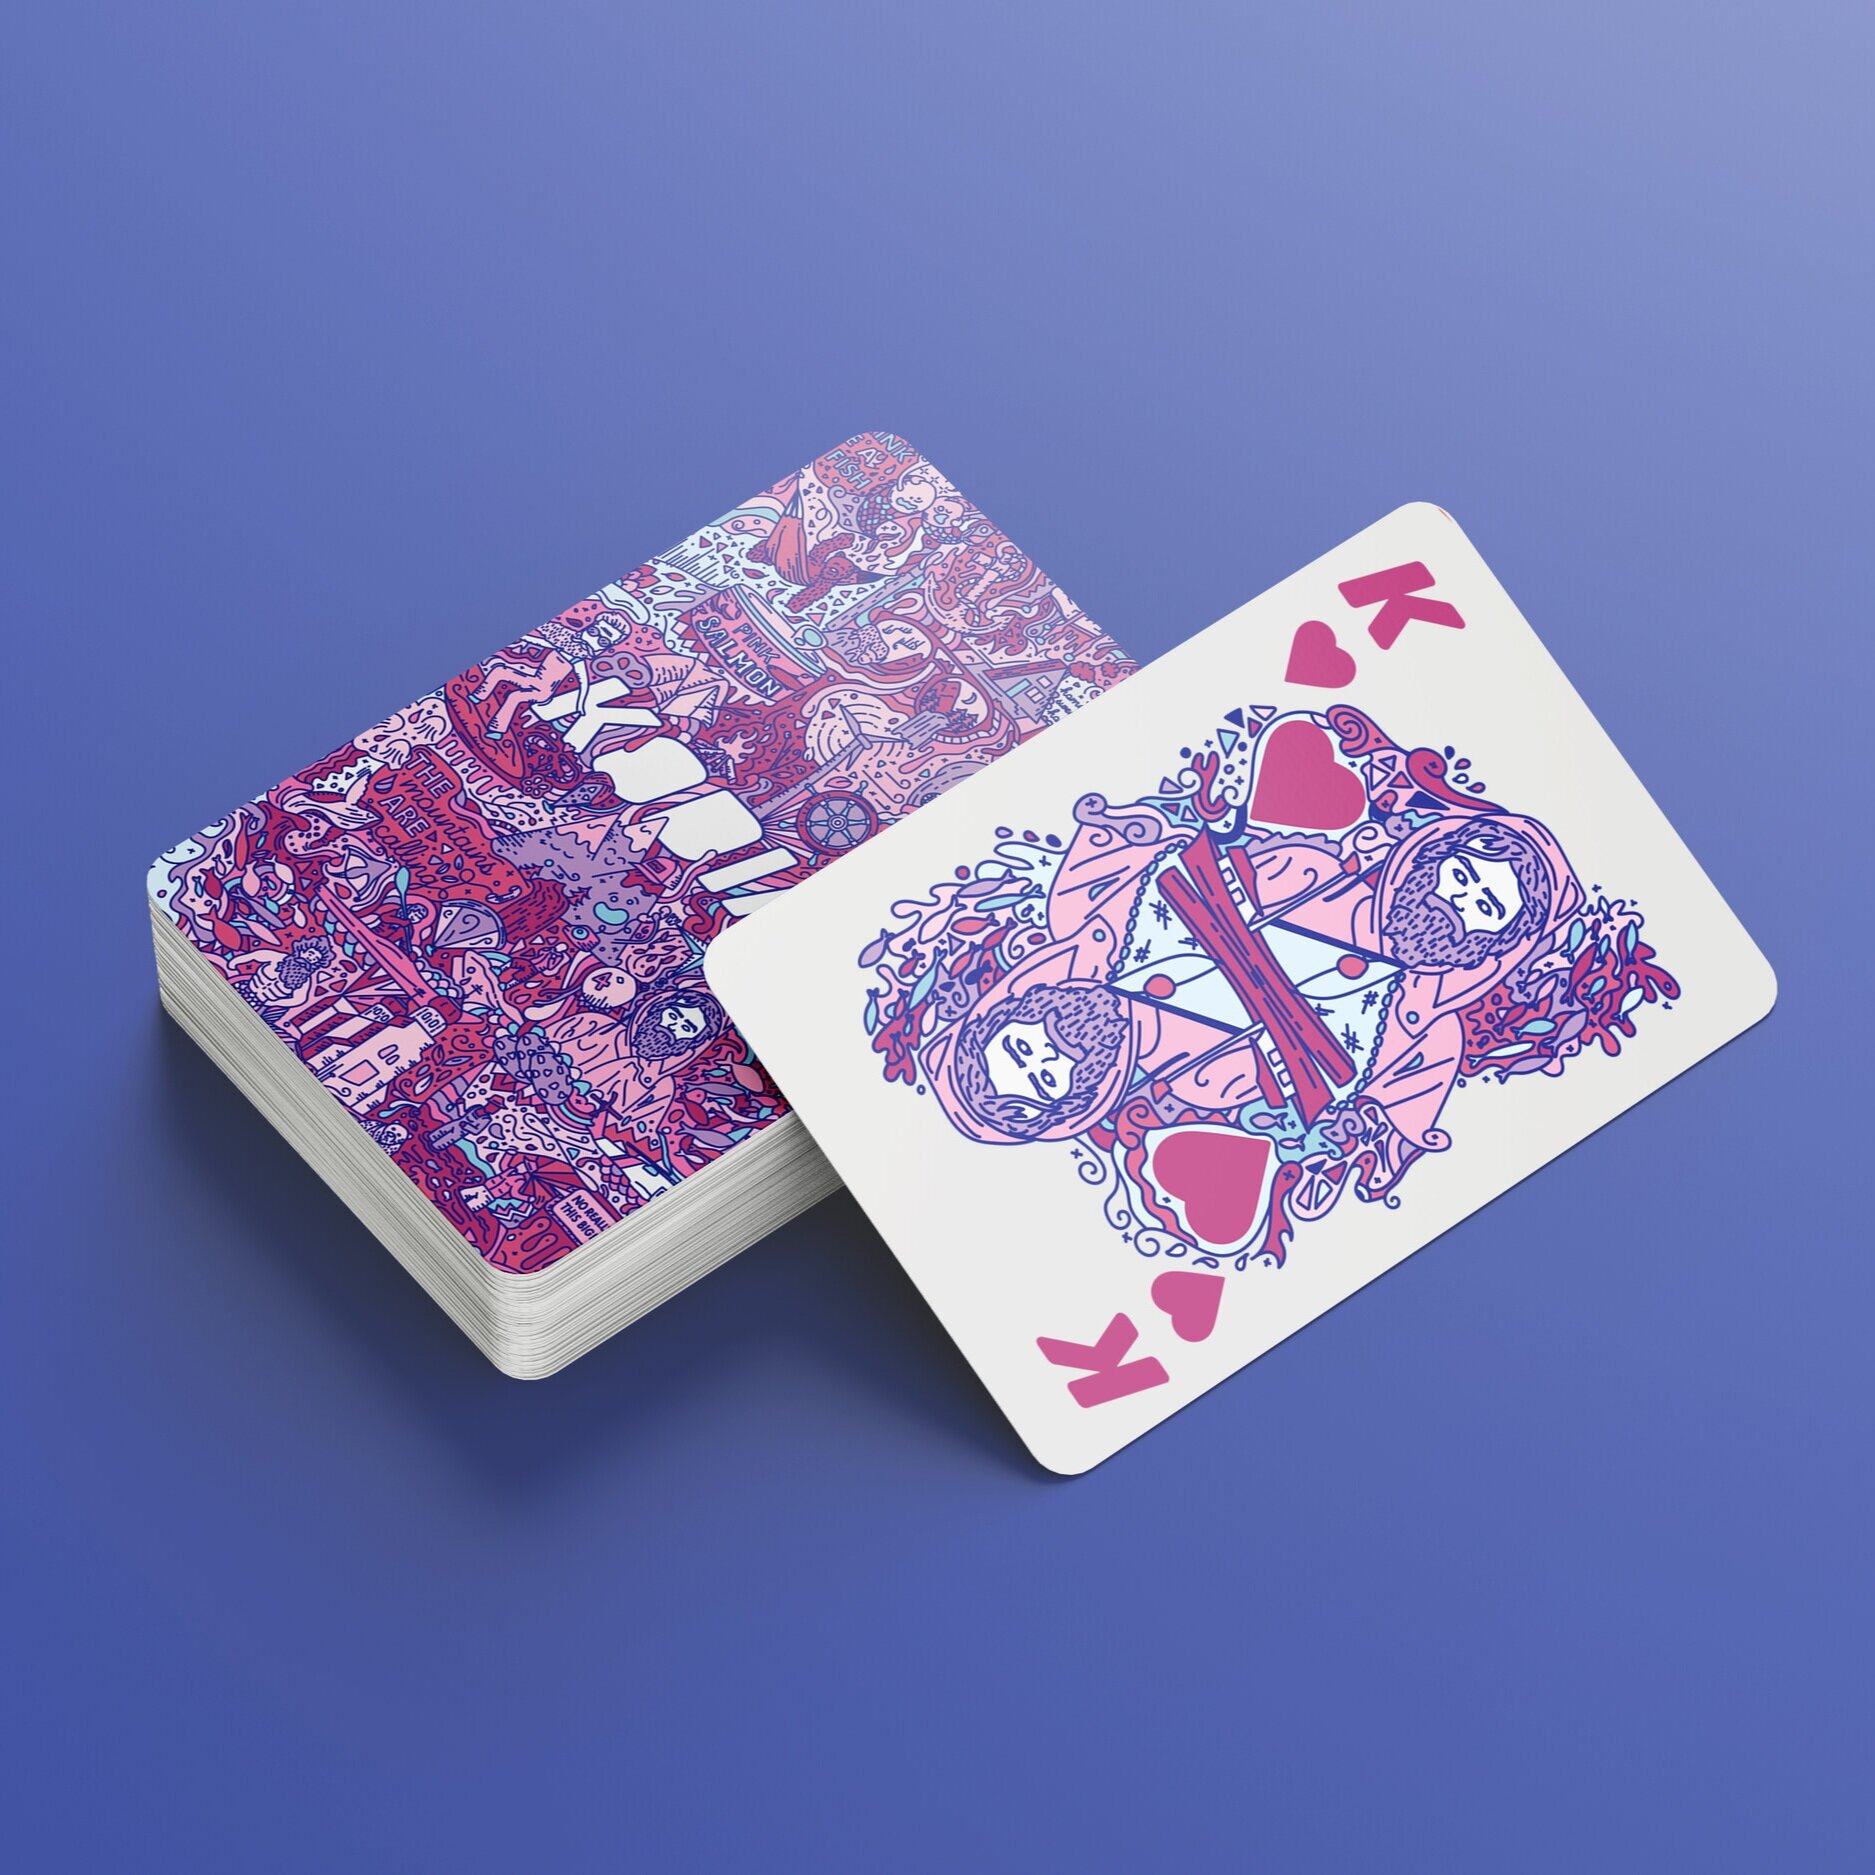 Kodiak Playing Cards - Beautifully designed gifts from Alaskan 